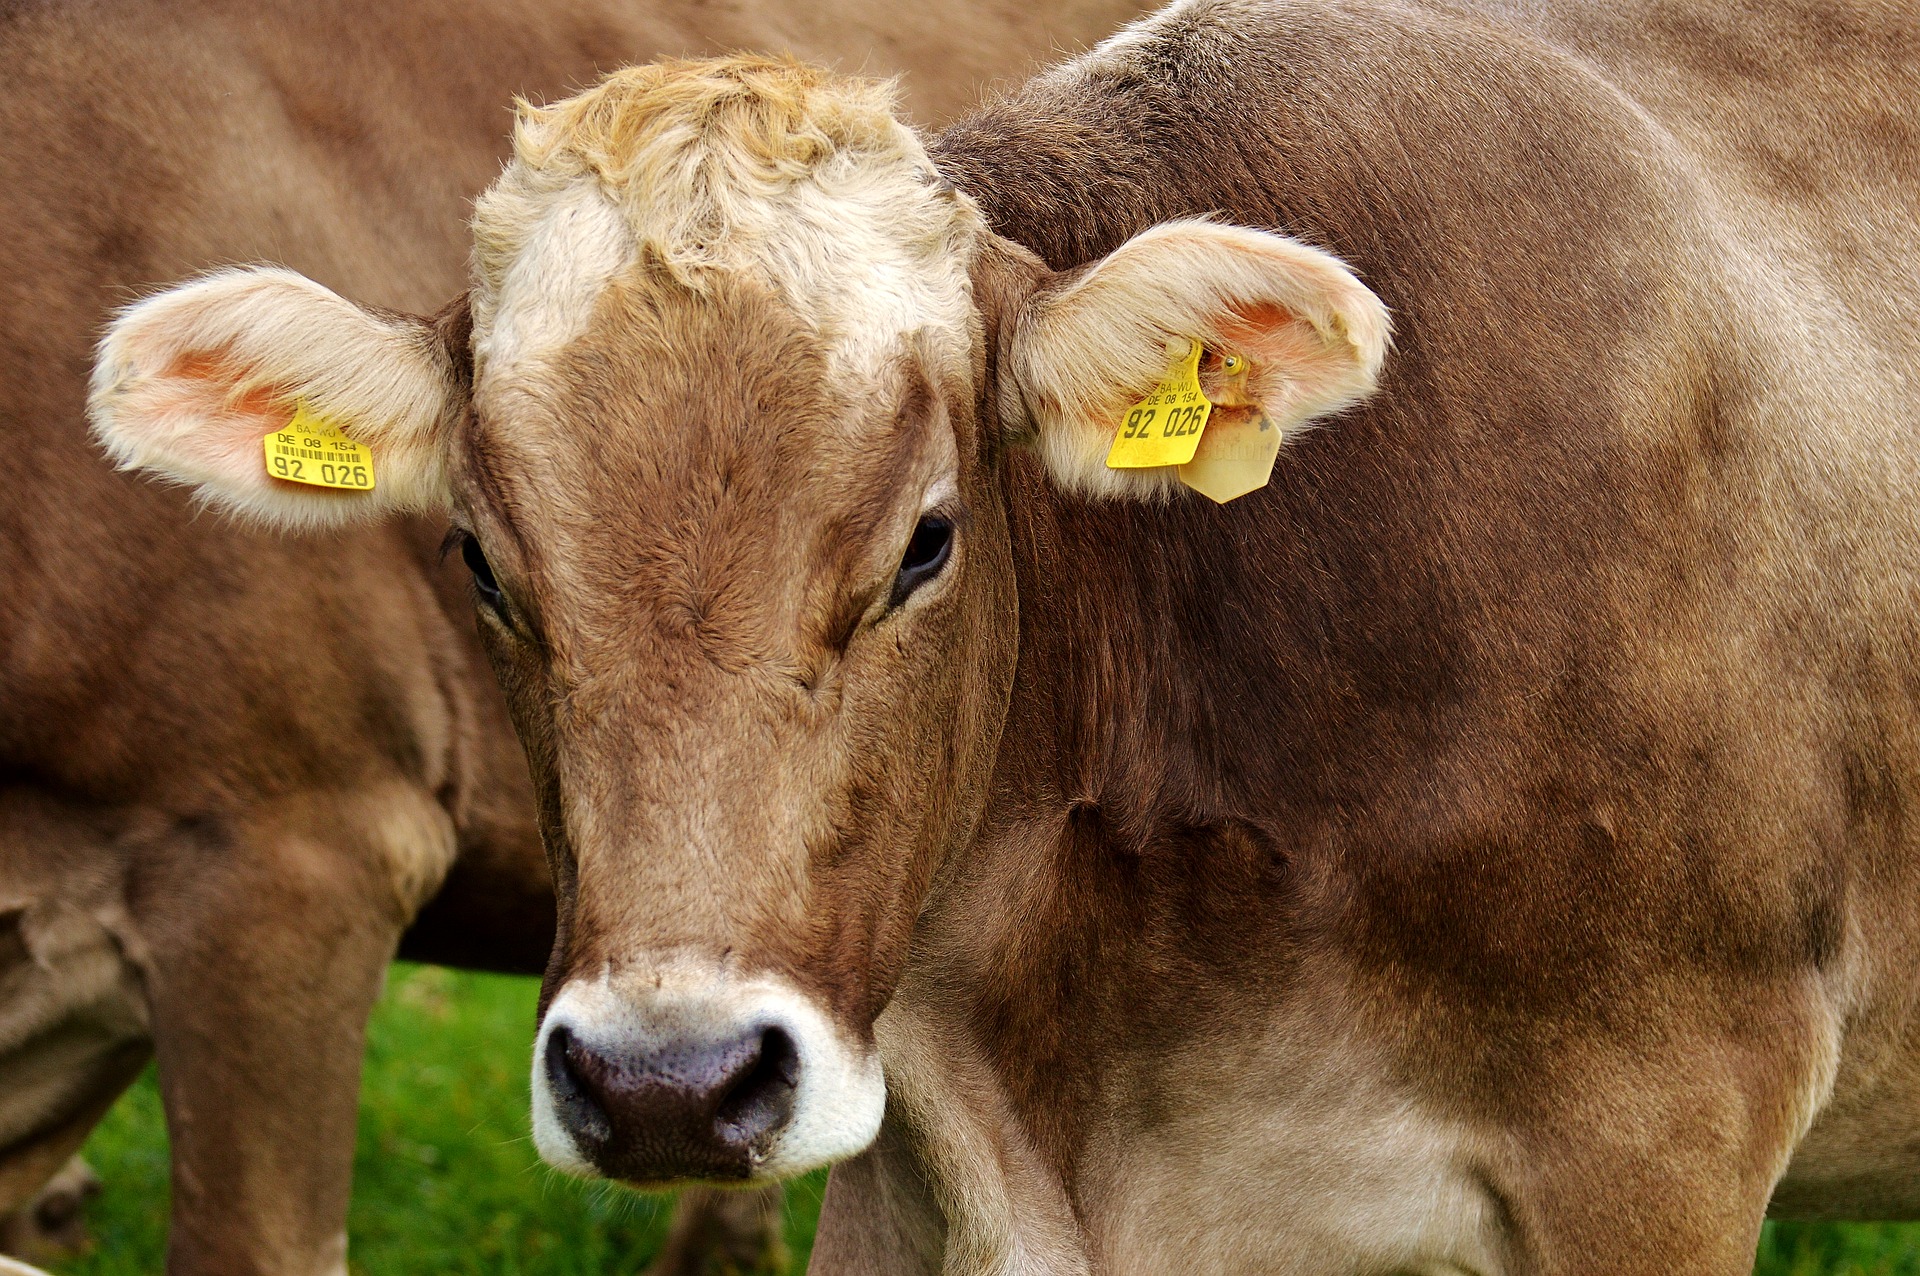 A closeup of a brown cow's face